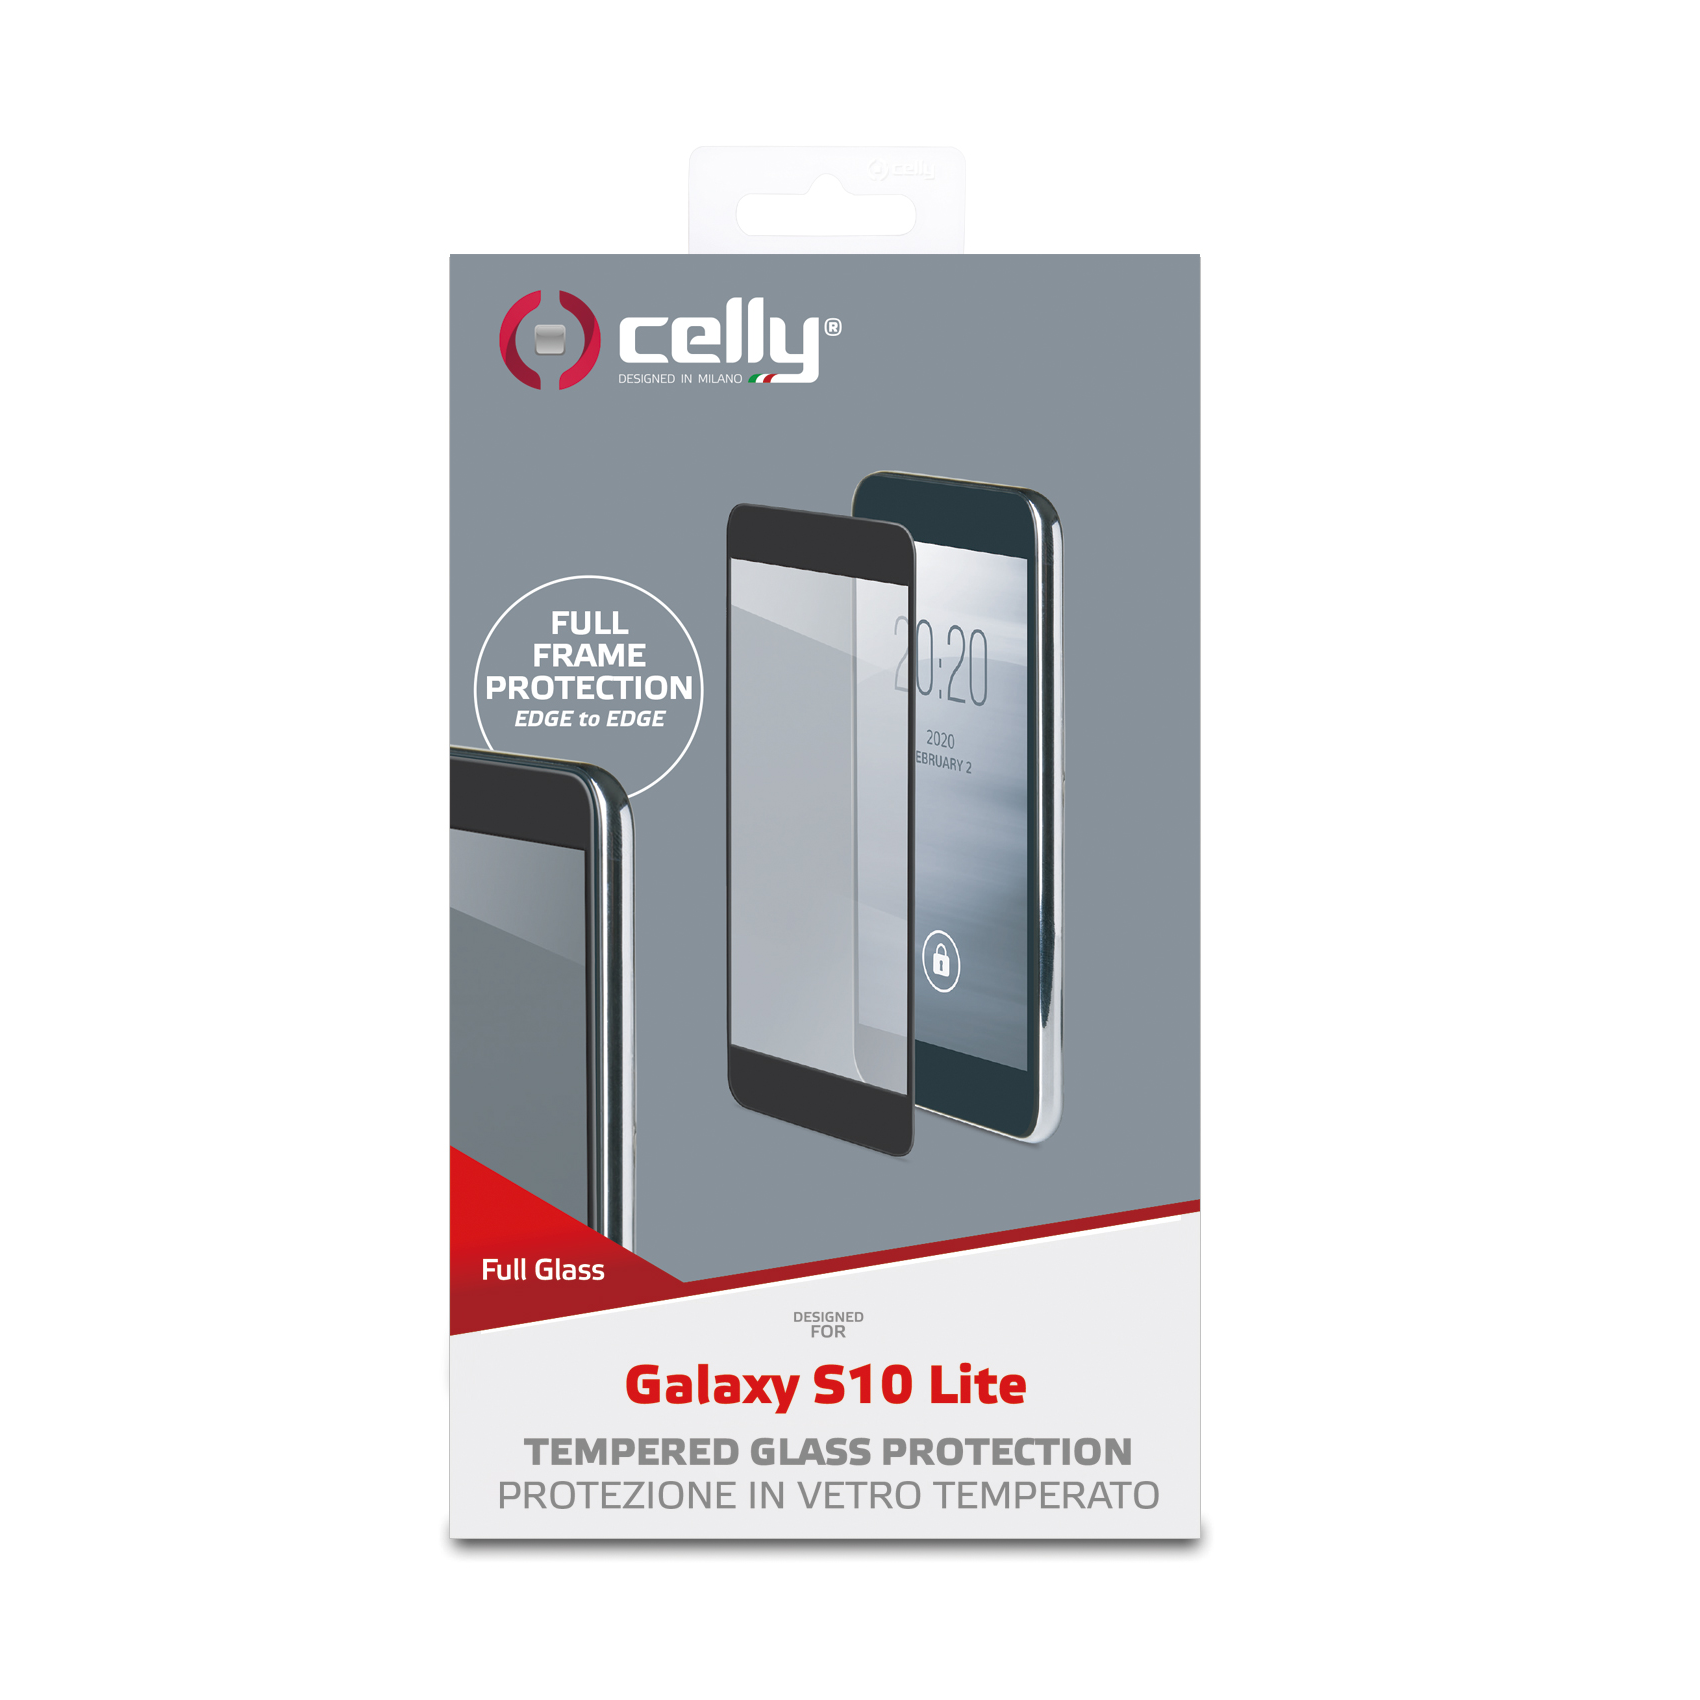 Full Glass Galaxy S10 Lite A71 5g Celly Fullglass895bk 8021735757528